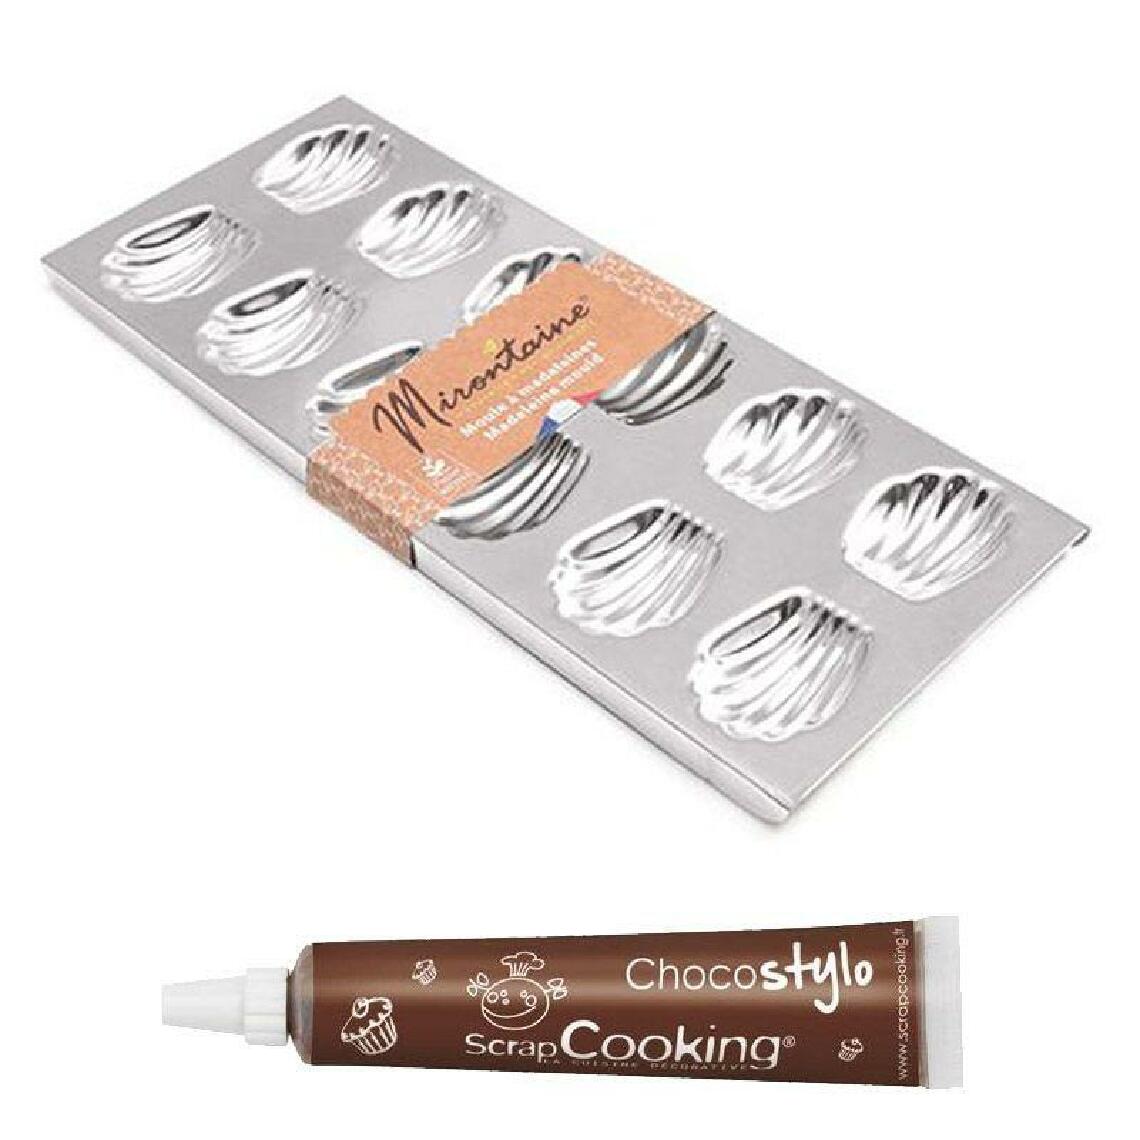 Scrapcooking - Moule à madeleines en fer blanc 12 empreintes + 1 Stylo chocolat offert - Kits créatifs